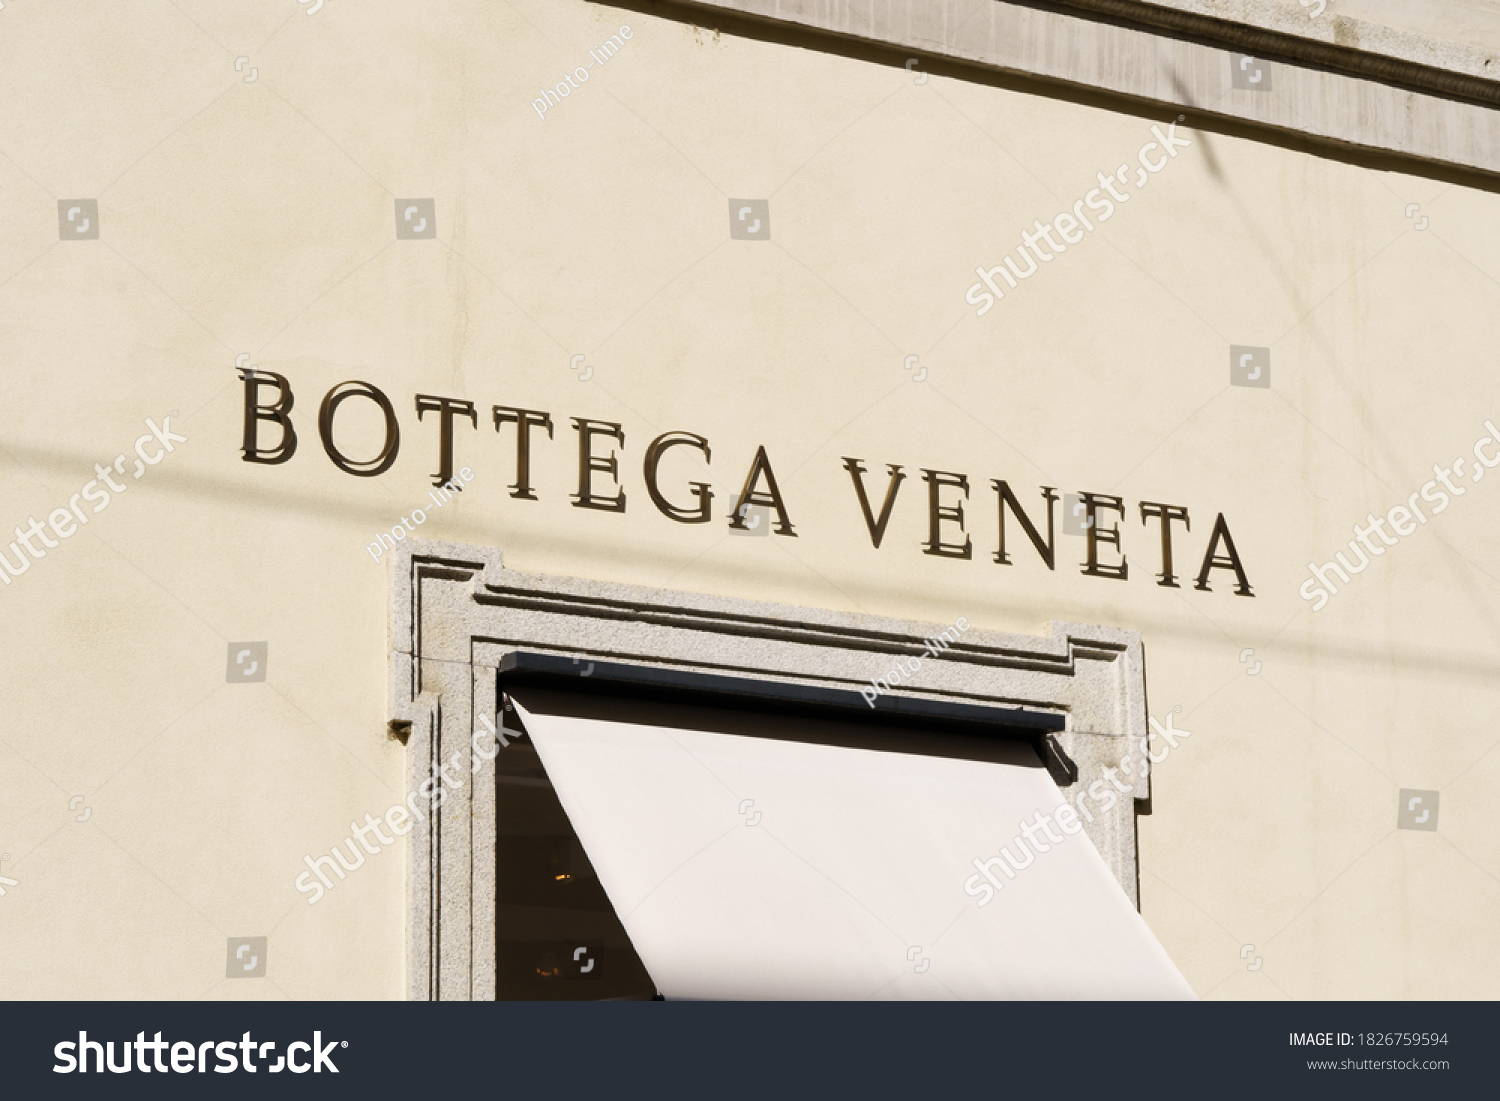 Bottega veneta shop Images, Stock Photos & Vectors | Shutterstock